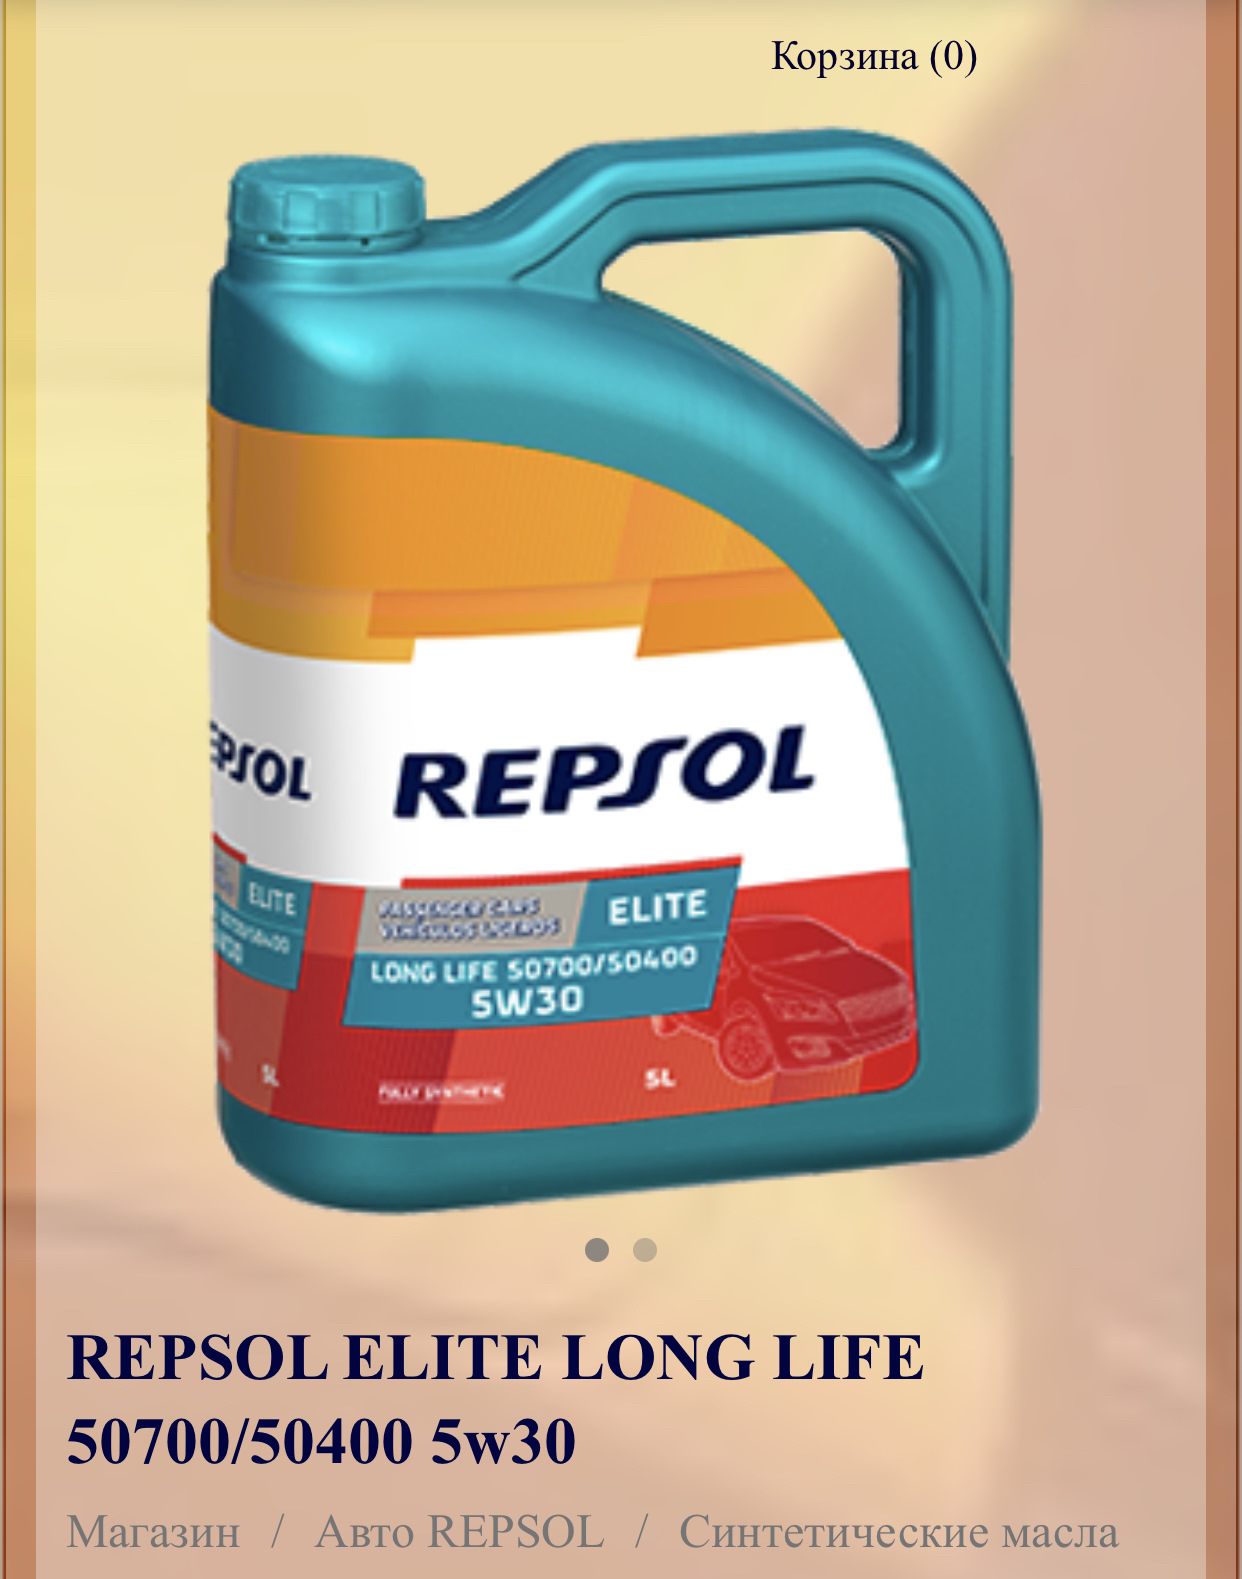 Репсол масло производитель. Repsol Elite long Life 50700/50400 5w30. Repsol Evolution long Life 5w30. Repsol Evolution 5w30. Repsol 5w30 504.